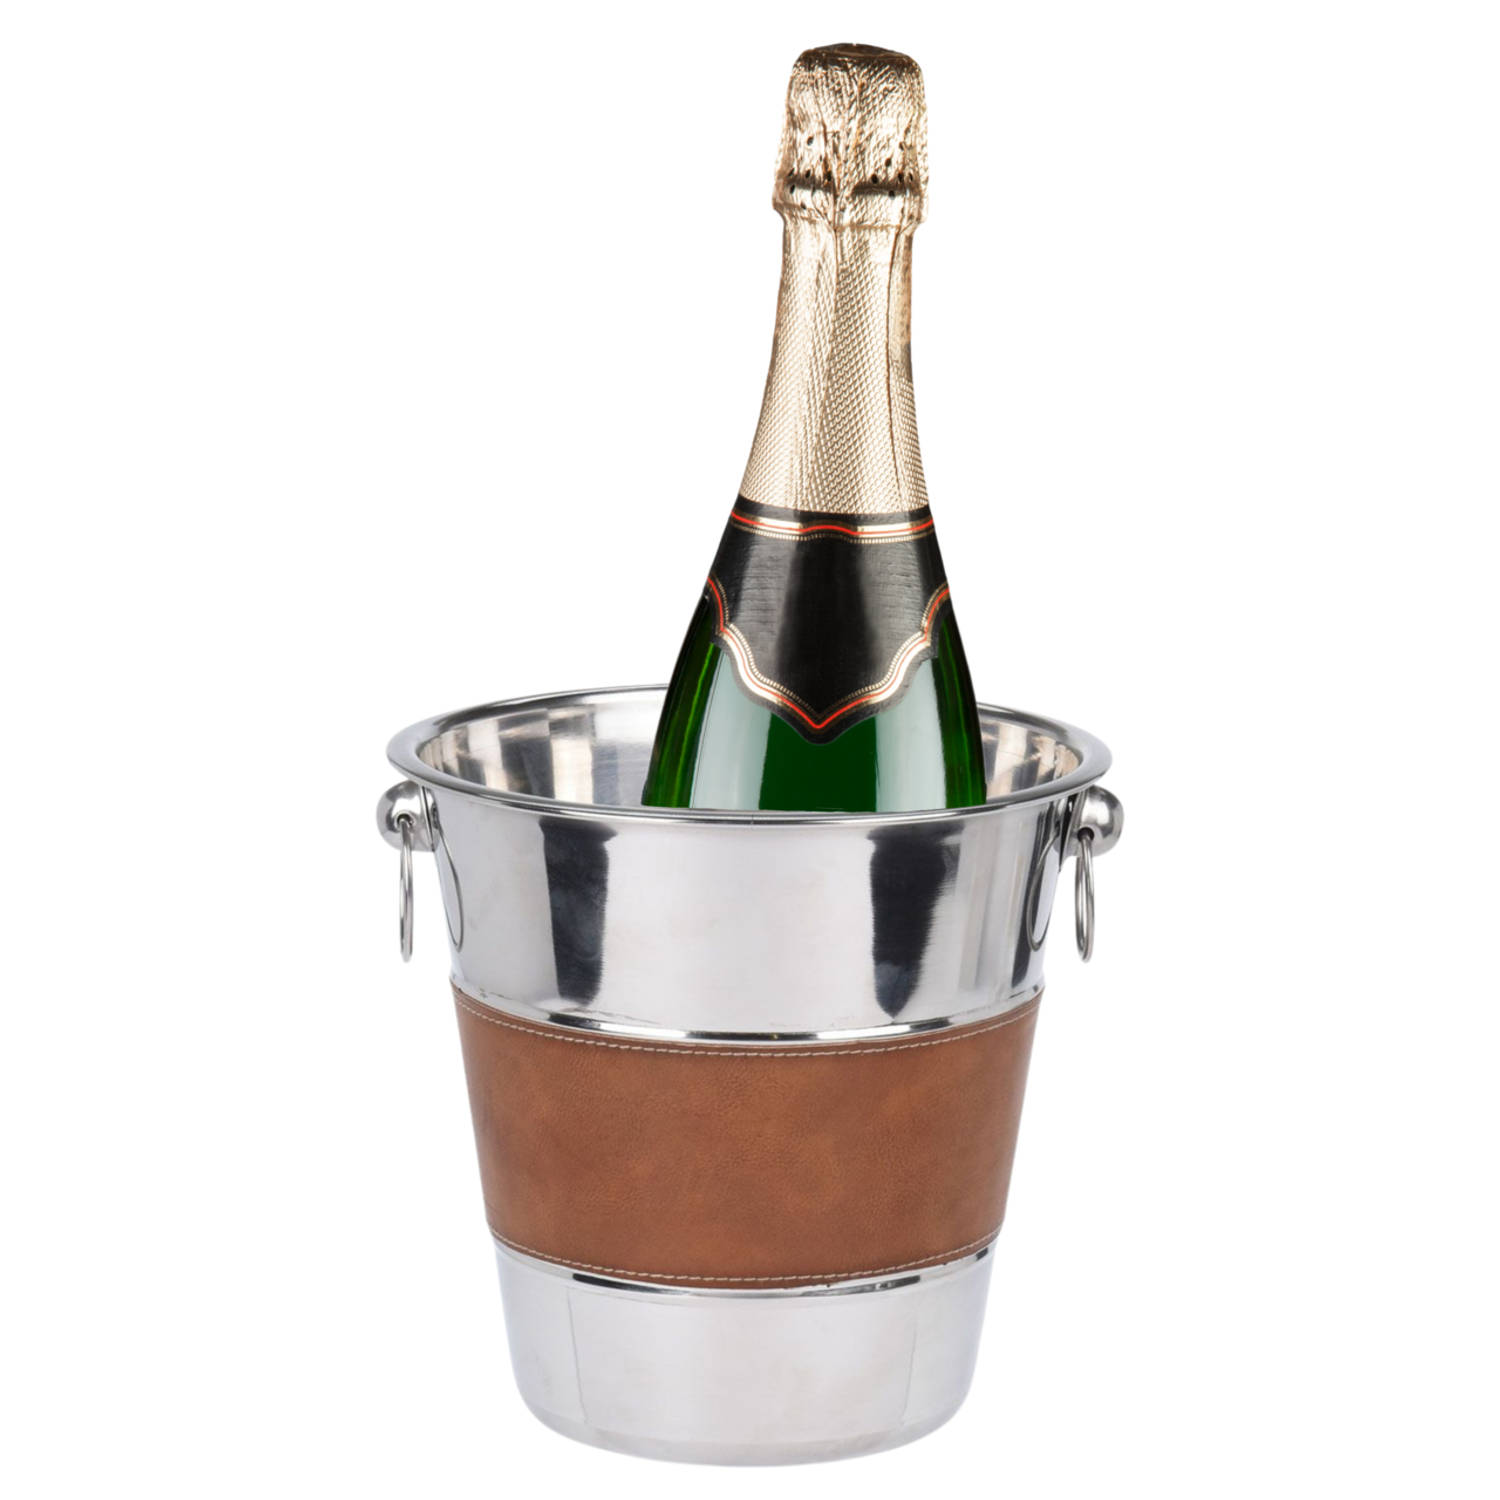 Gedachte evenwicht Assimileren Ijsemmer - Champagnekoeler - Wijnkoeler - RVS - Ø21 x 21 Cm | Blokker